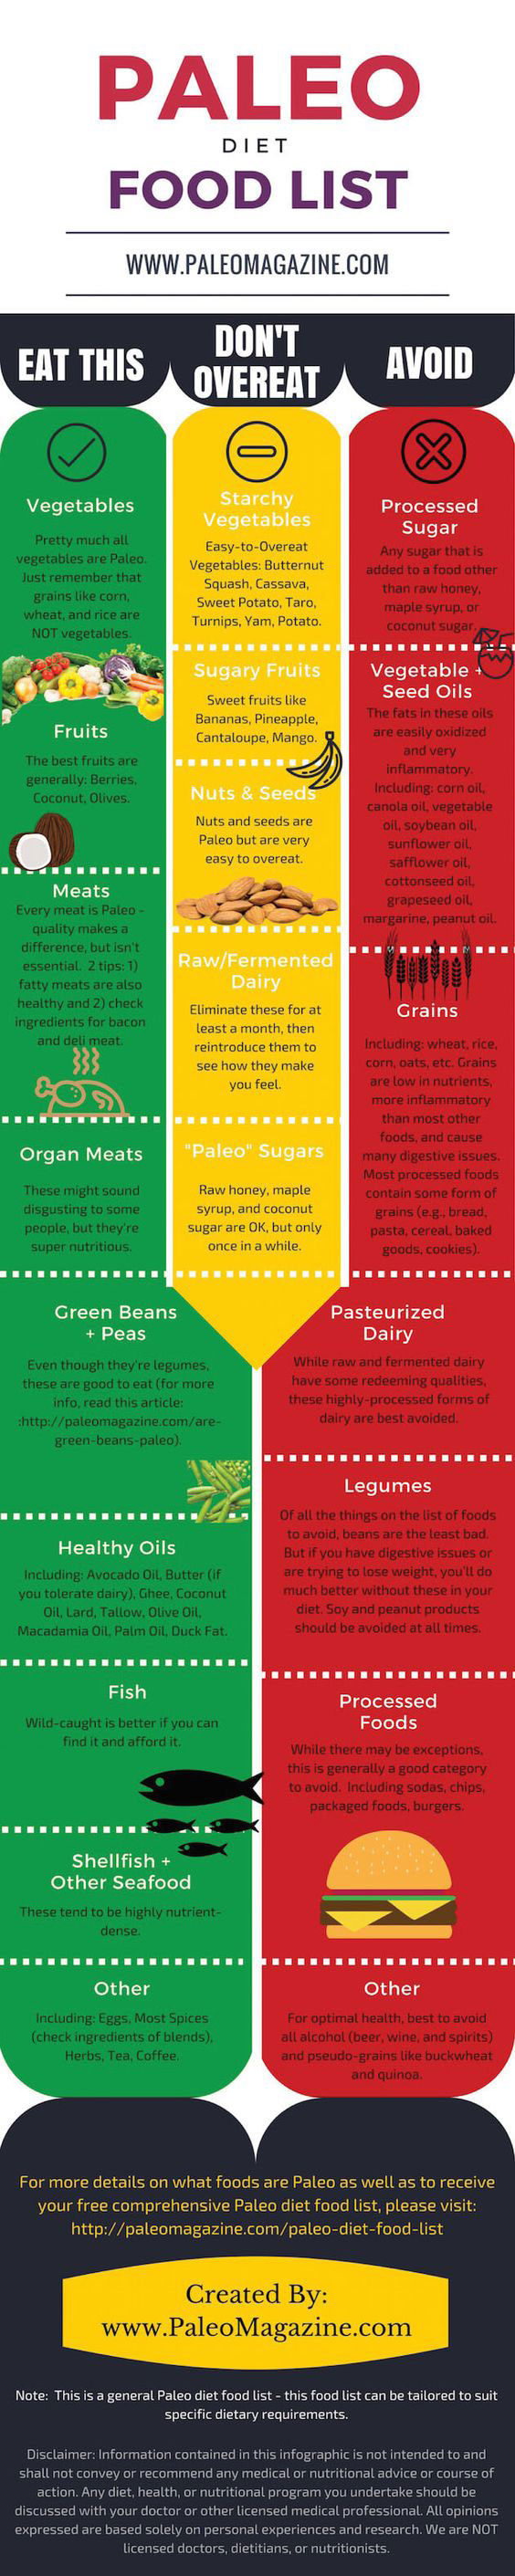 Paleo Diet Food List {Infographic} - Best Infographics